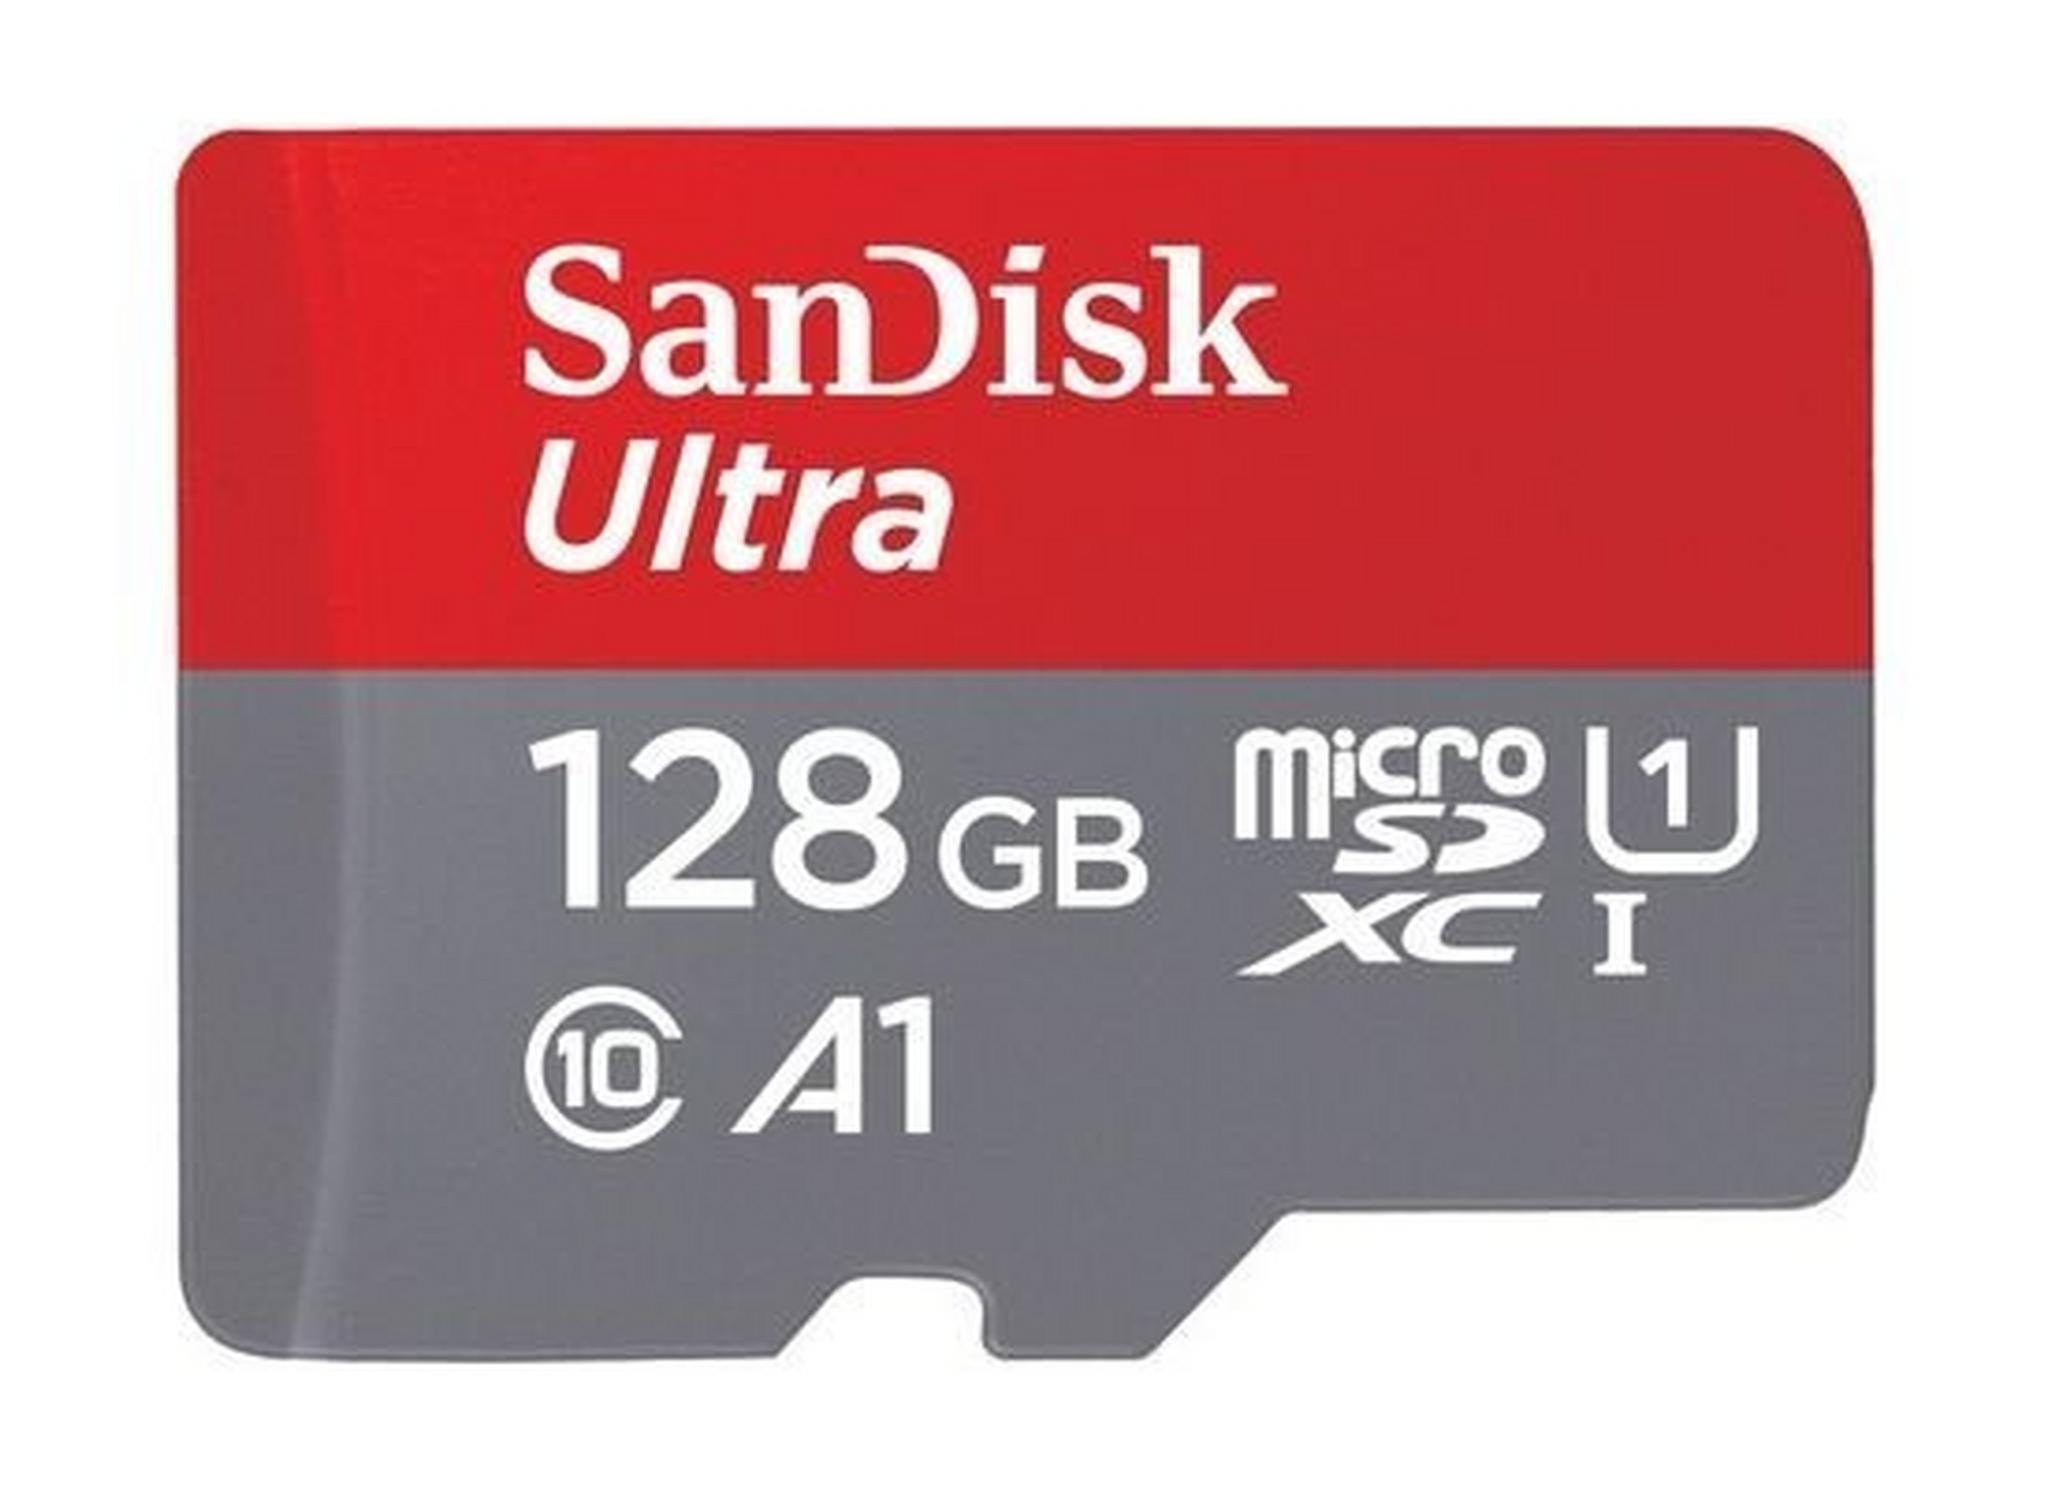 SanDisk Ultra MicroSD 128GB 95MBs Class 10 Memory Card